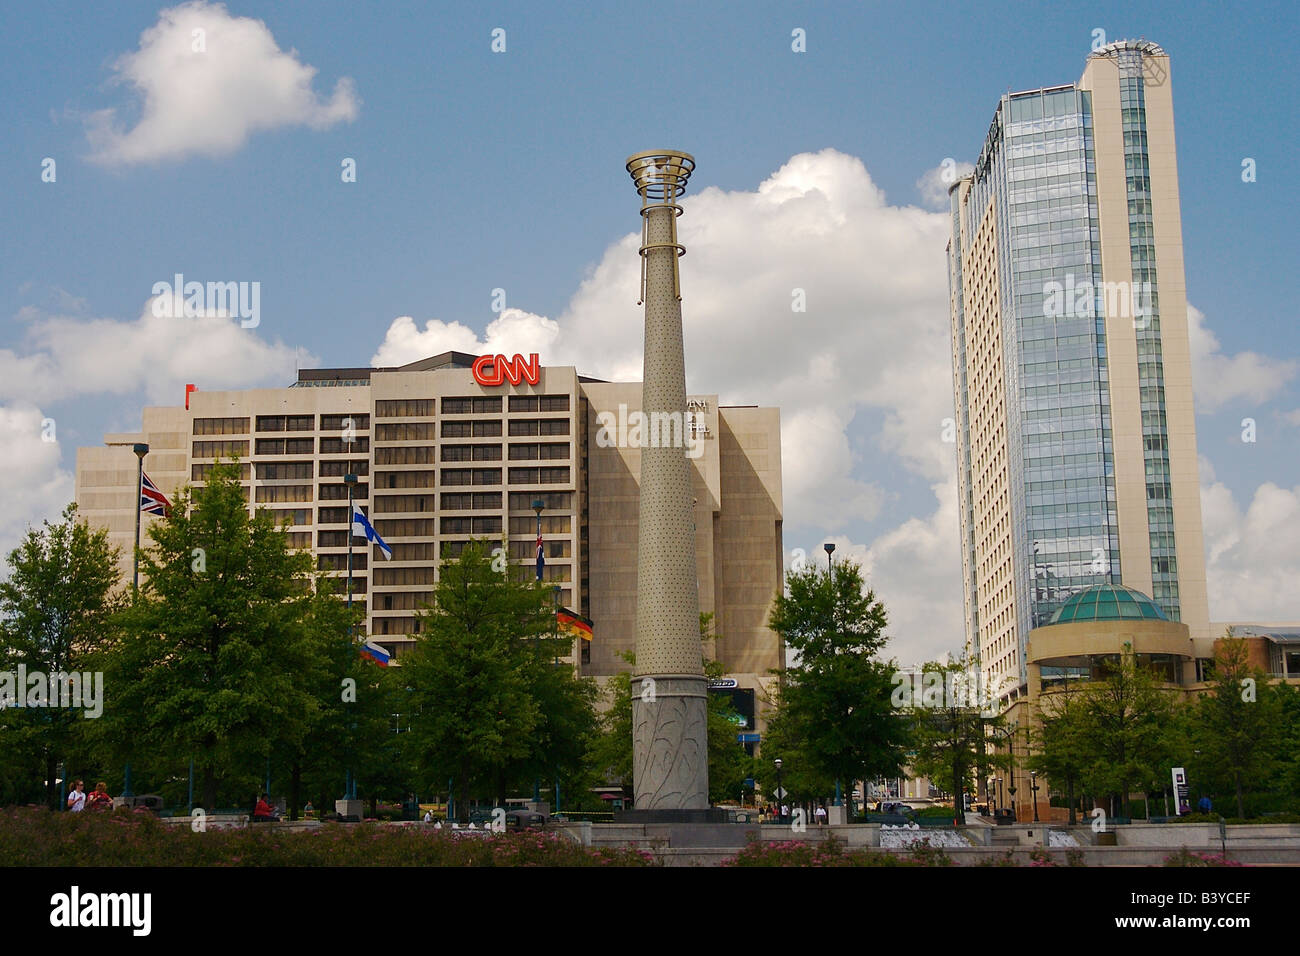 North America, USA, Georgia, Atlanta. Architecture seen from Centennial Olympic Park. Stock Photo